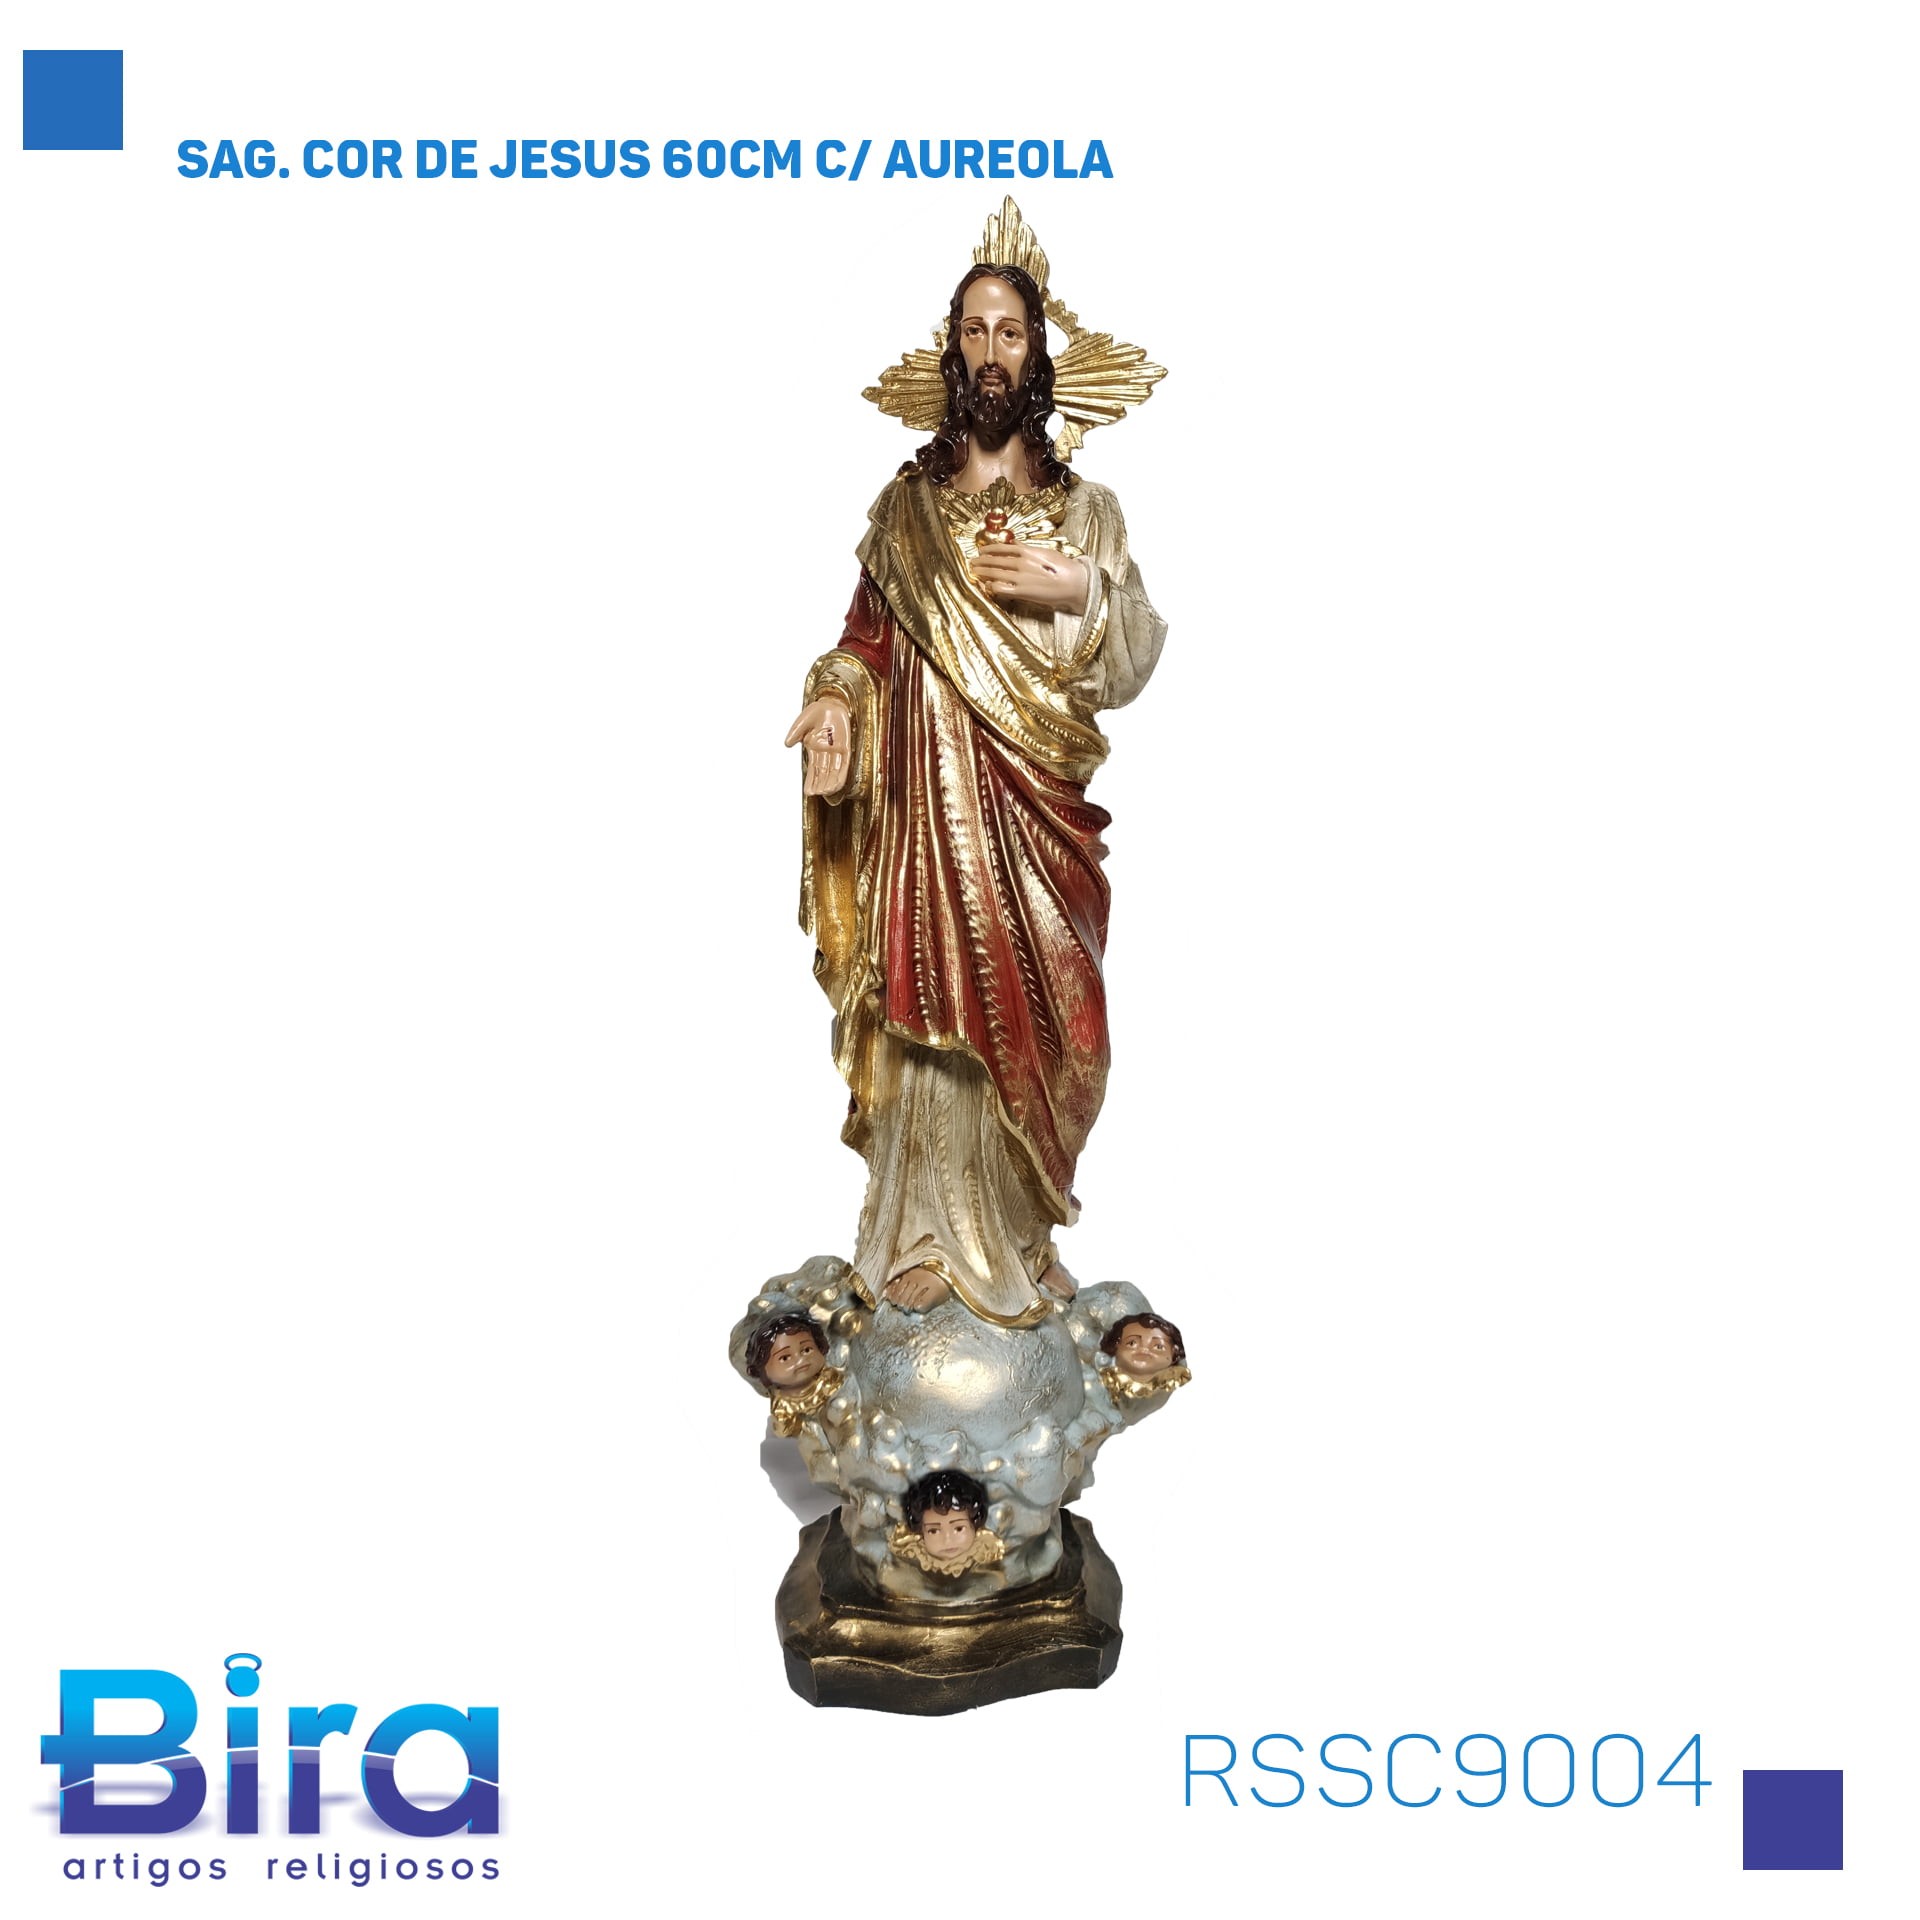 Bira Artigos Religiosos - SAG. COR DE JESUS 60CM C/ AUREOLA Cód. RSSC9004